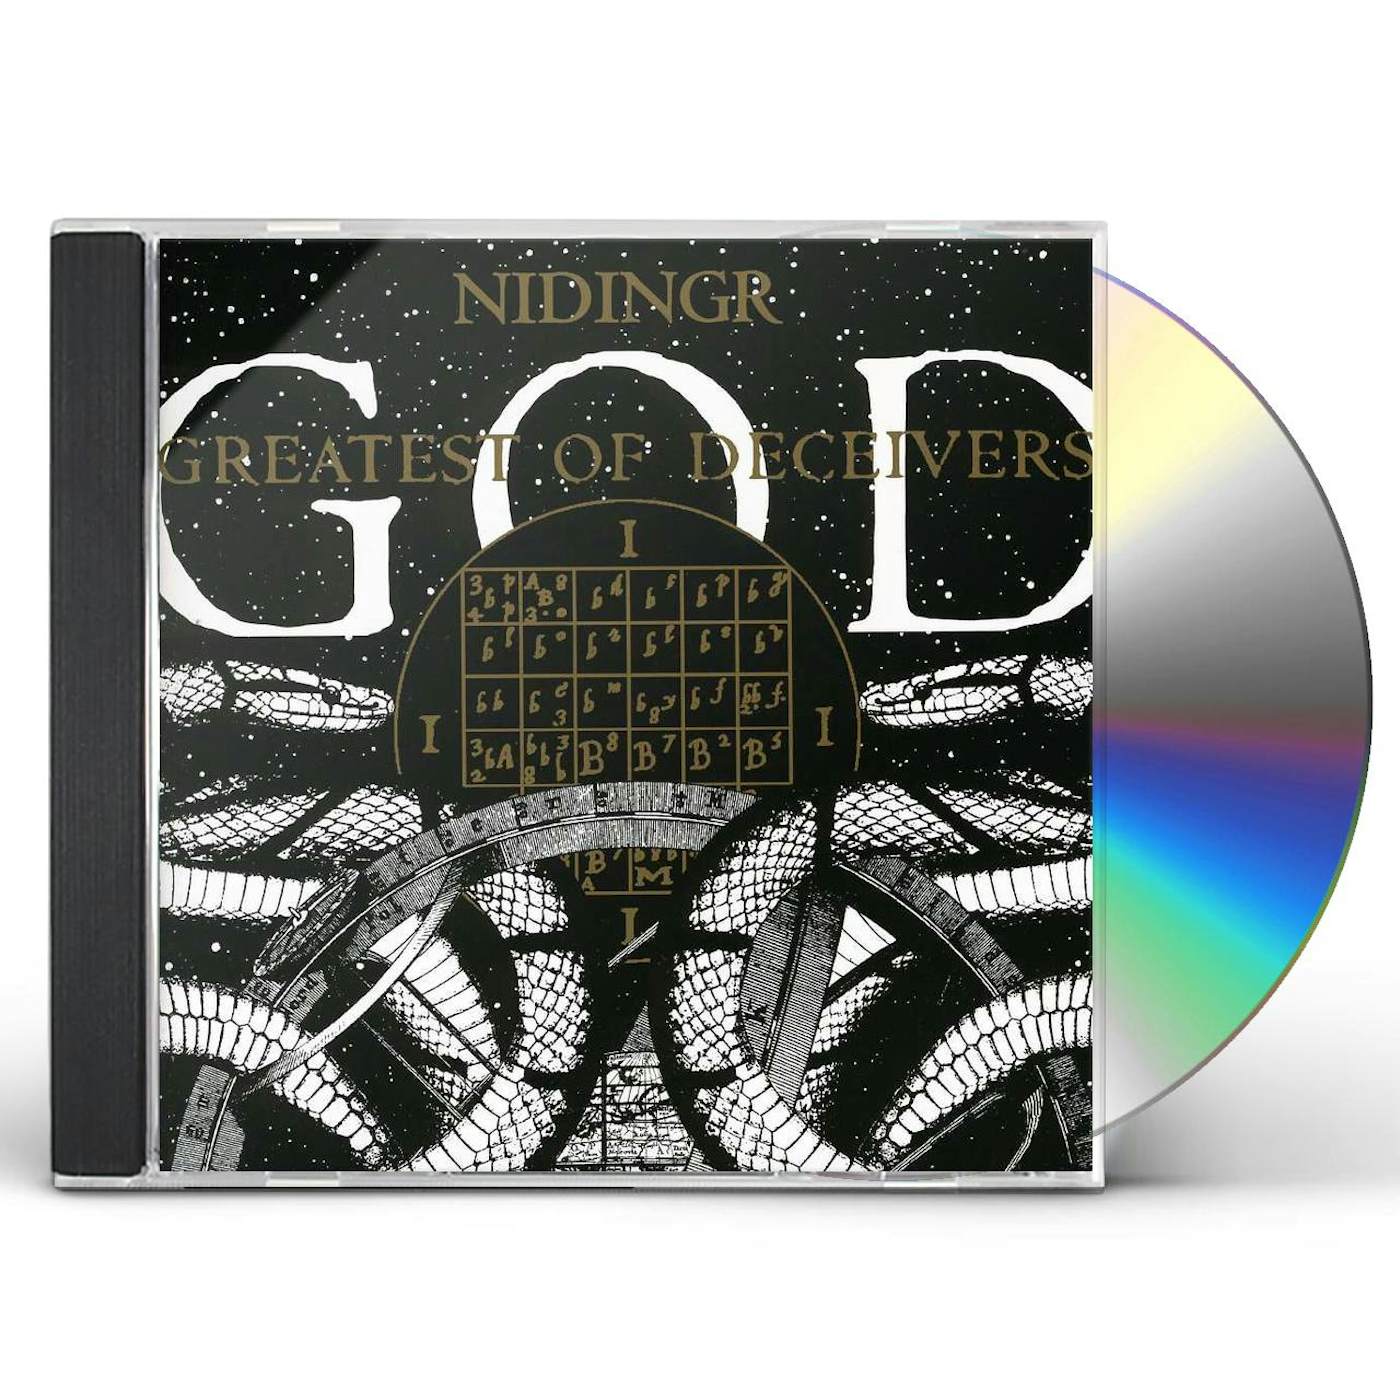 Nidingr GREATEST OF DECEIVERS CD